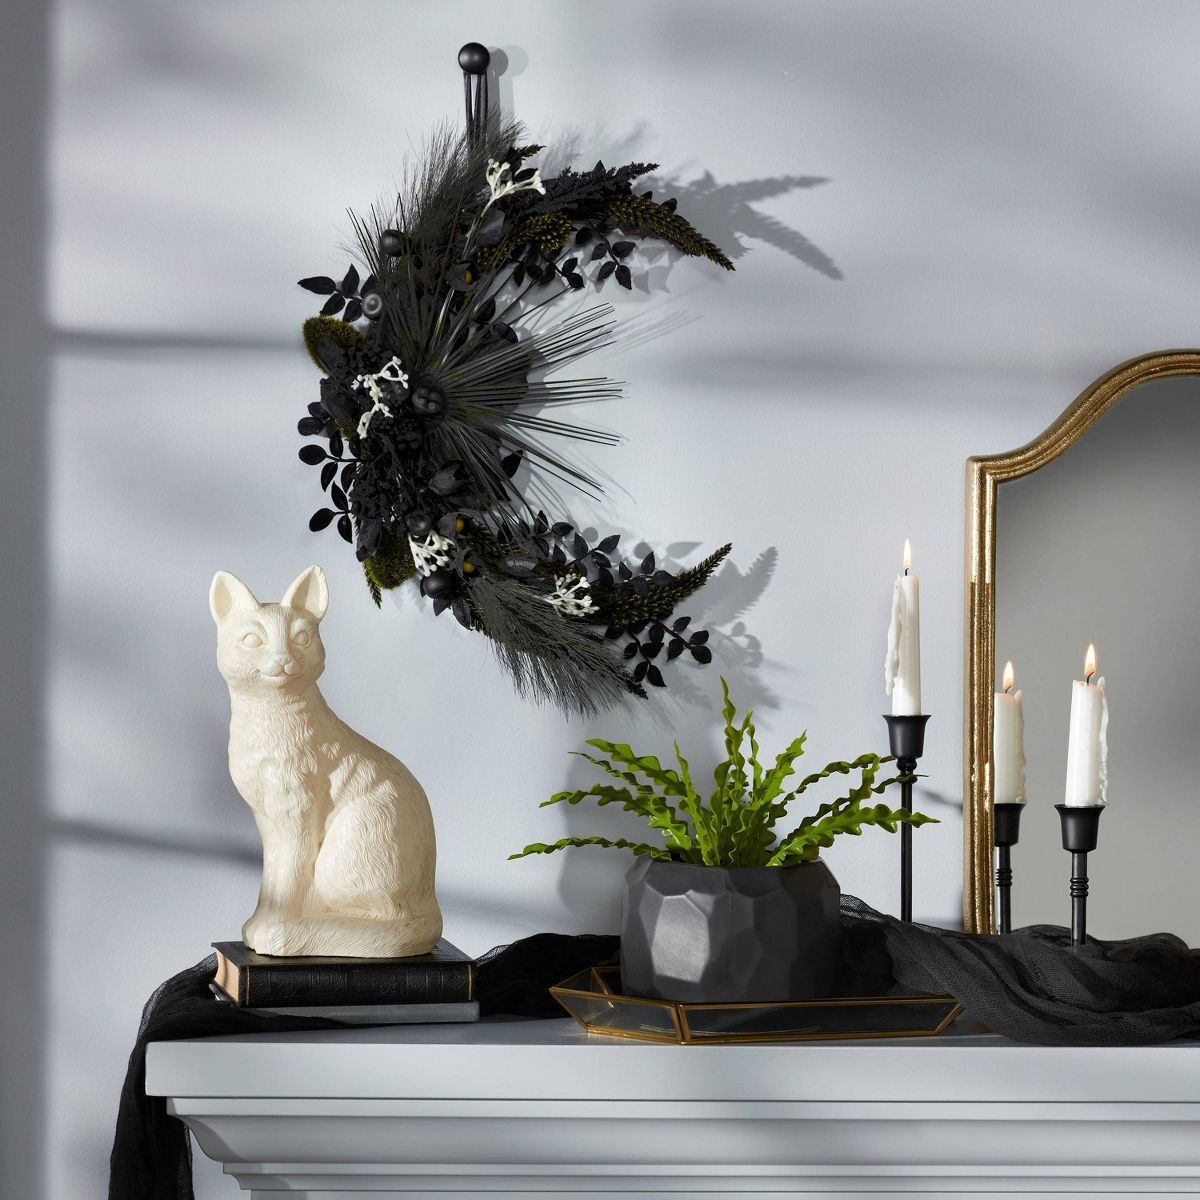 Plastic Cream Cat Halloween Decorative Sculpture - Hyde & EEK! Boutique™ | Target